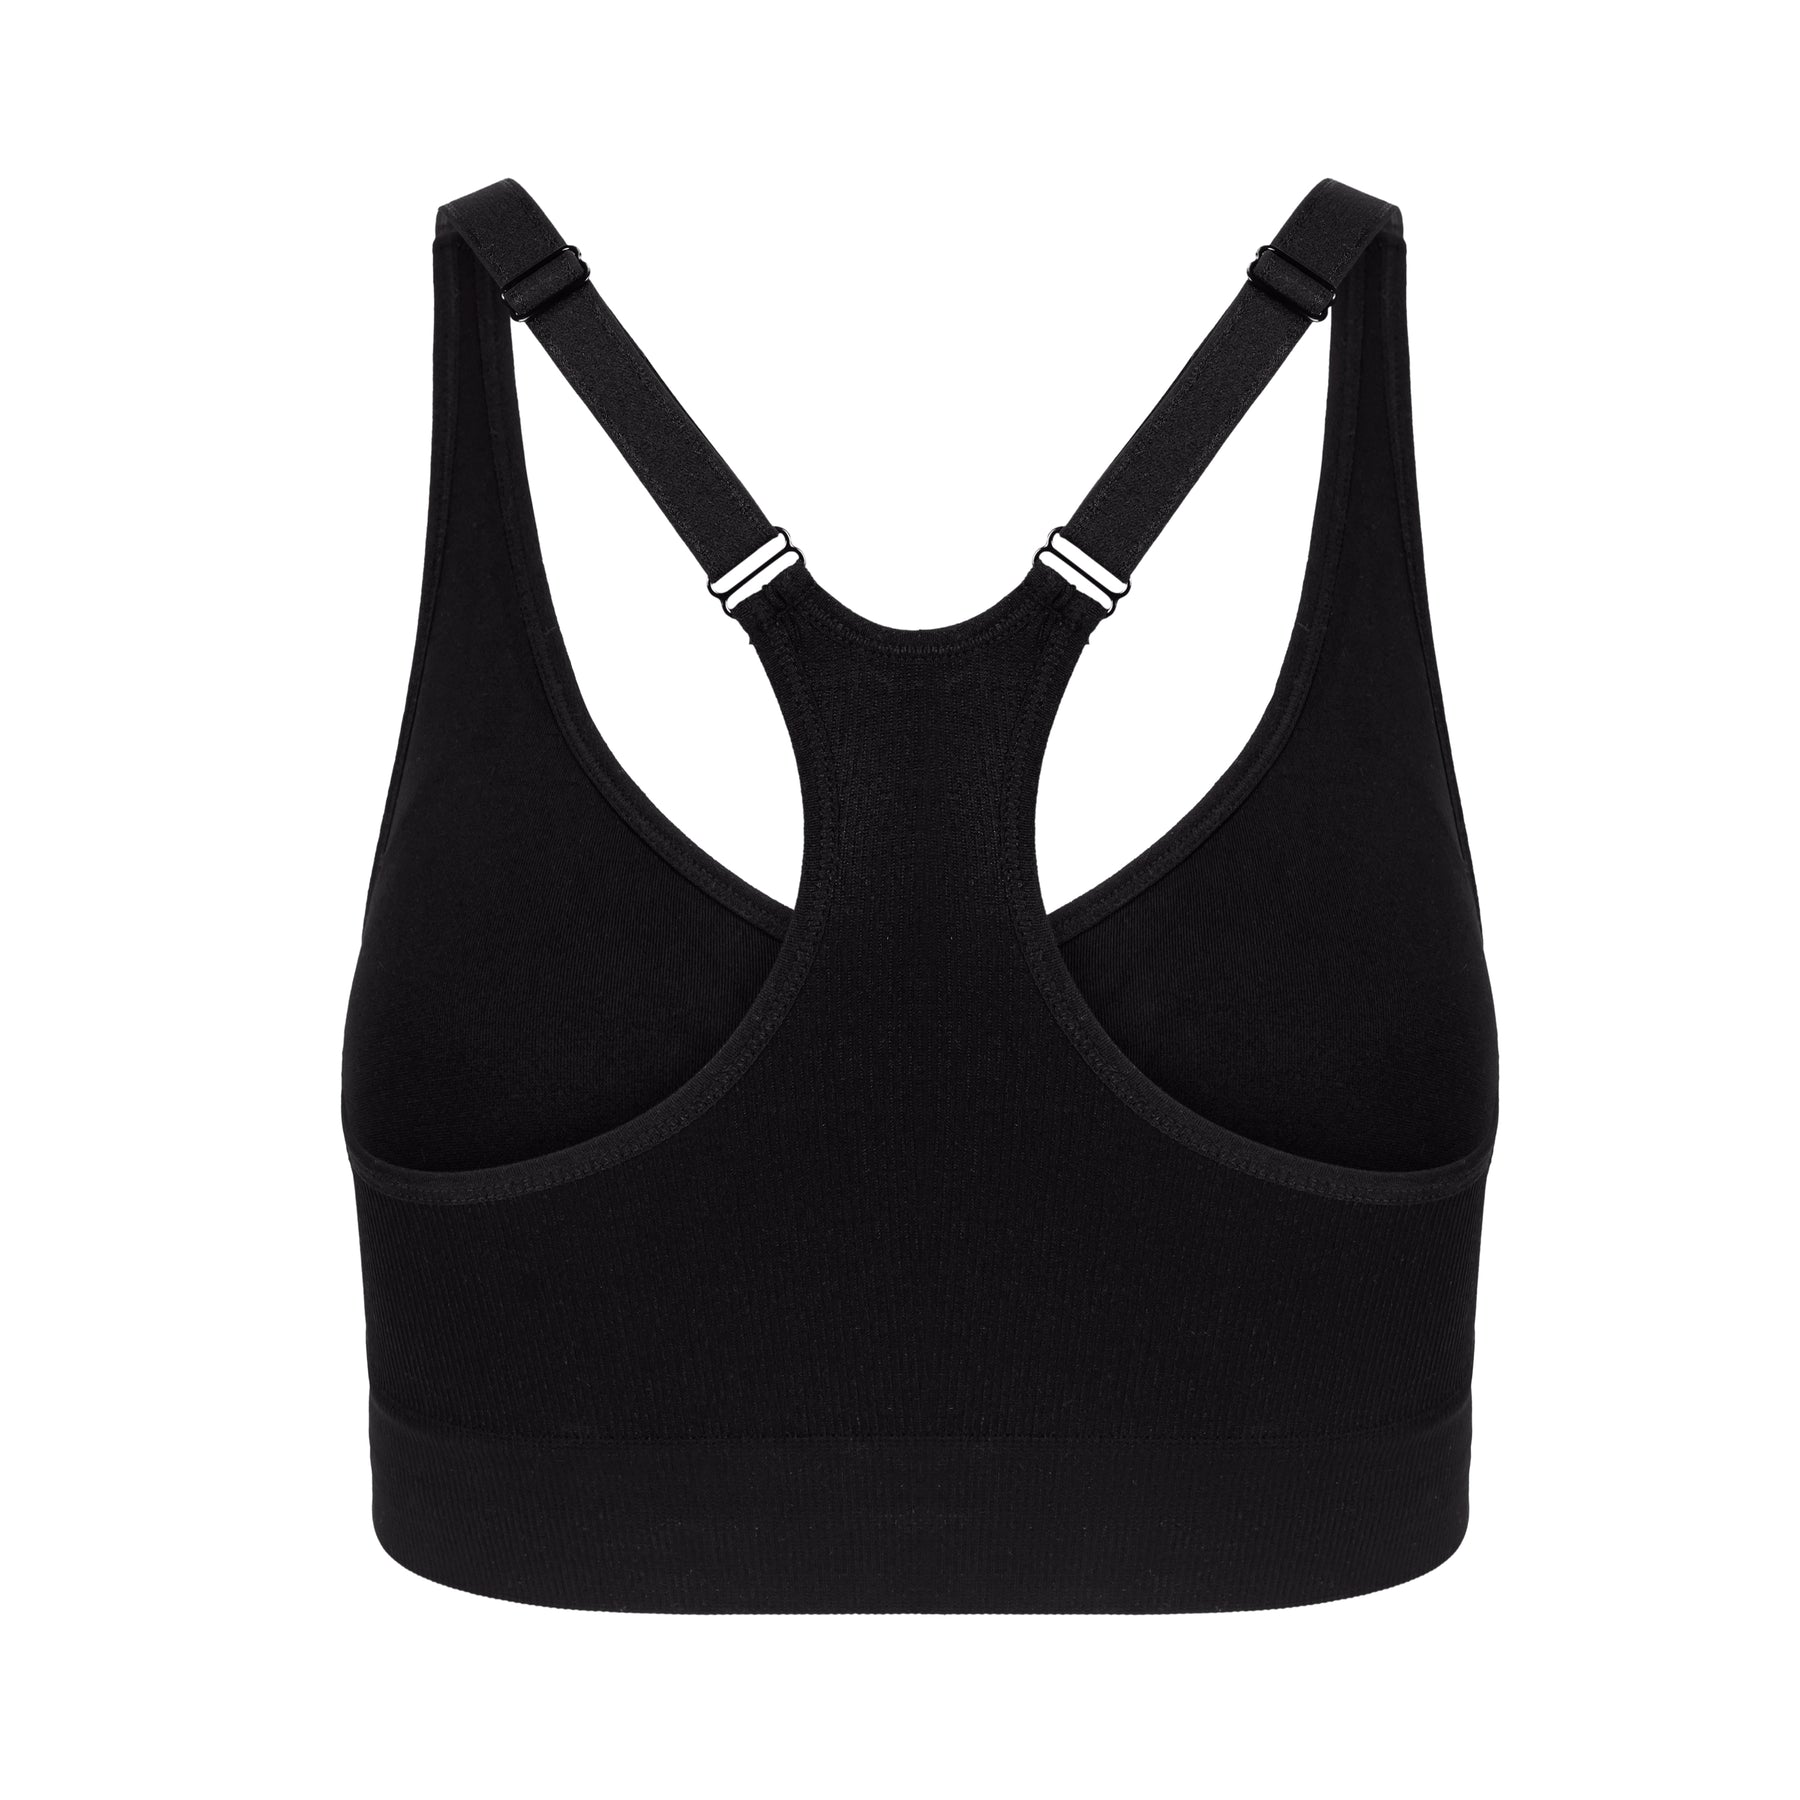 Joylab Women's Sport bra Medium Suppoert Racerback Black onyx Size